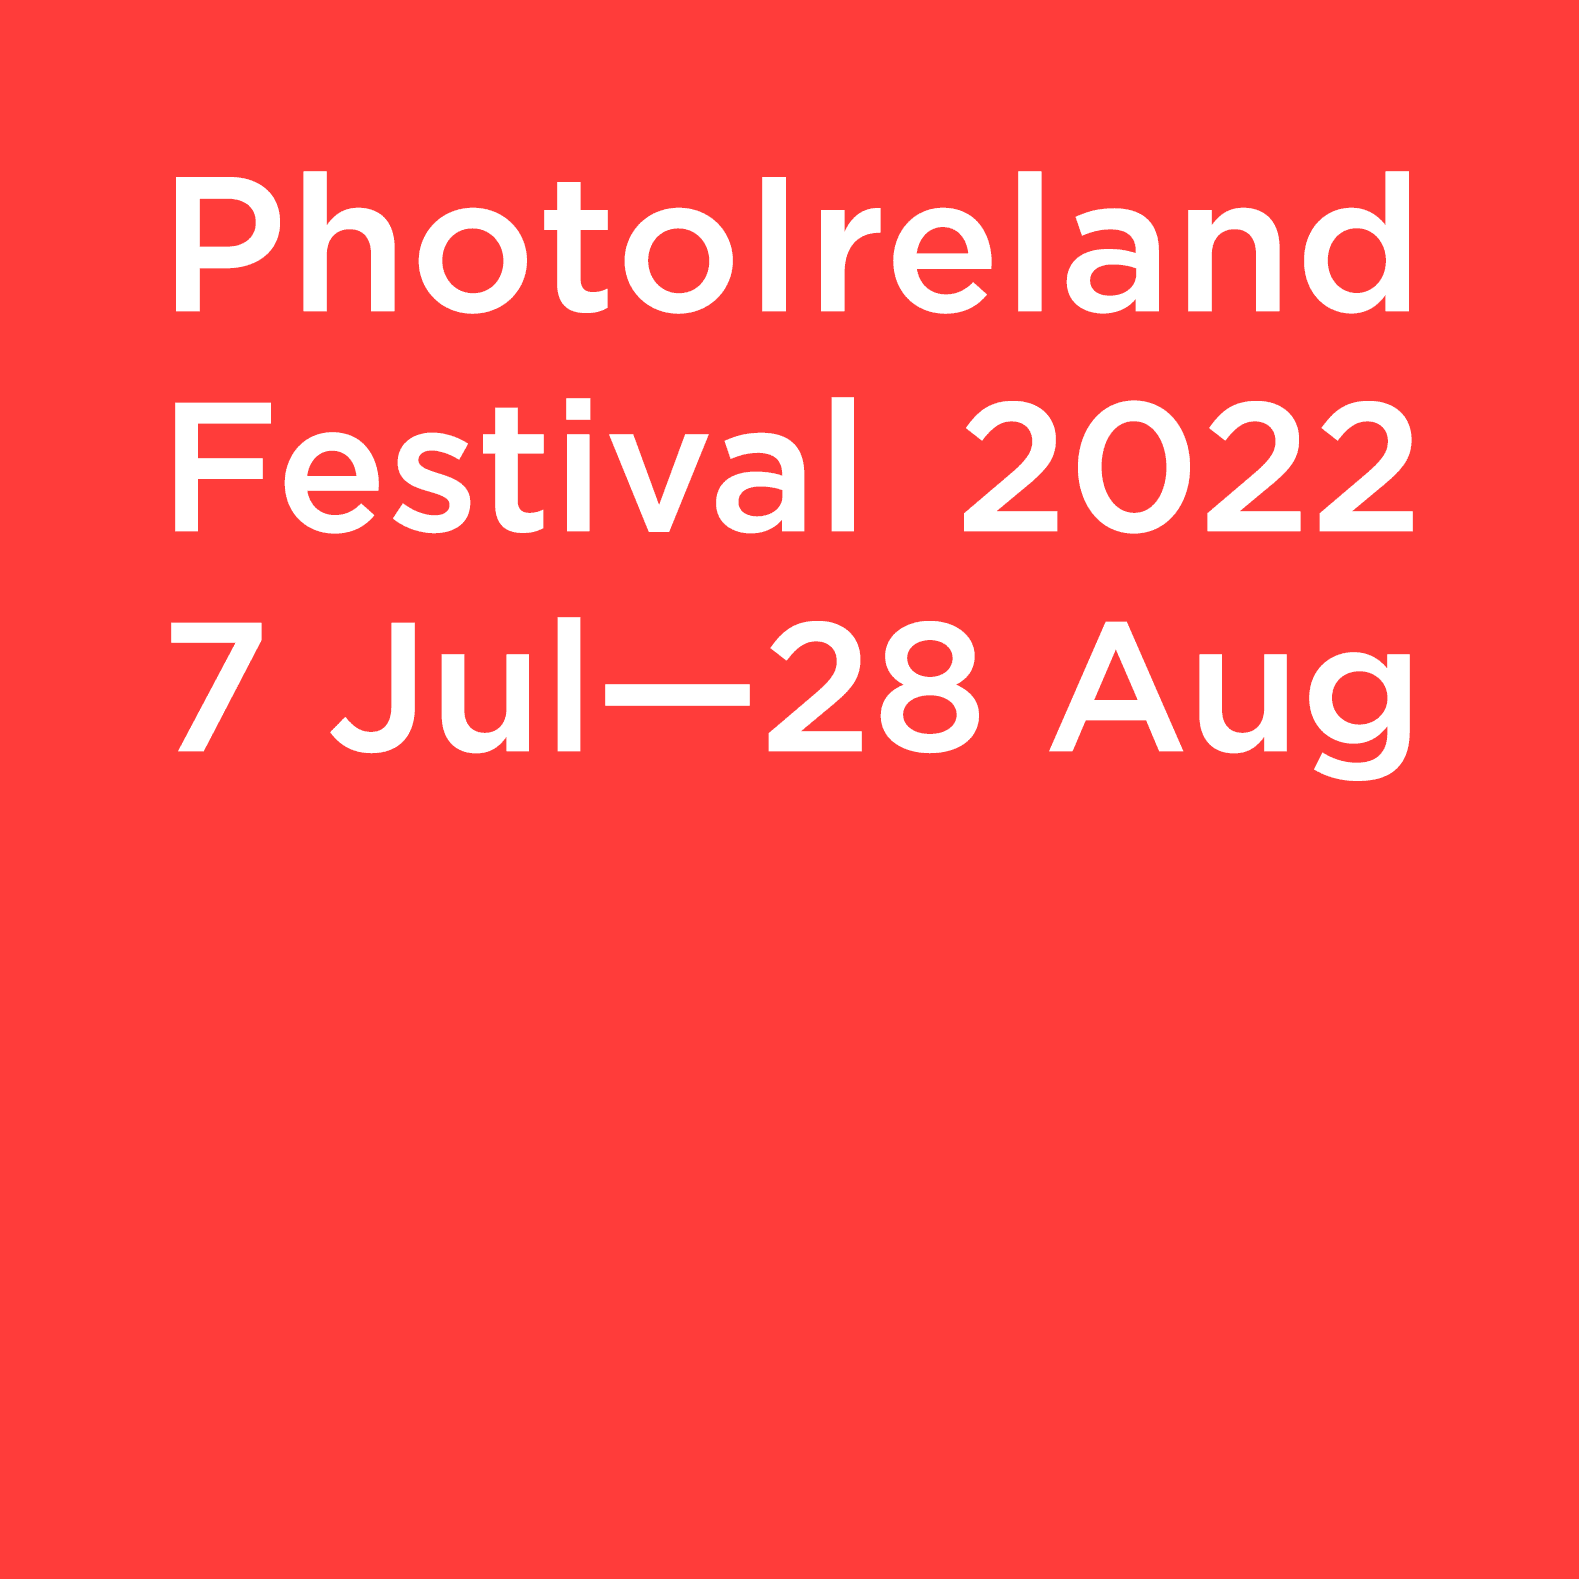 PhotoIreland Festival 2022